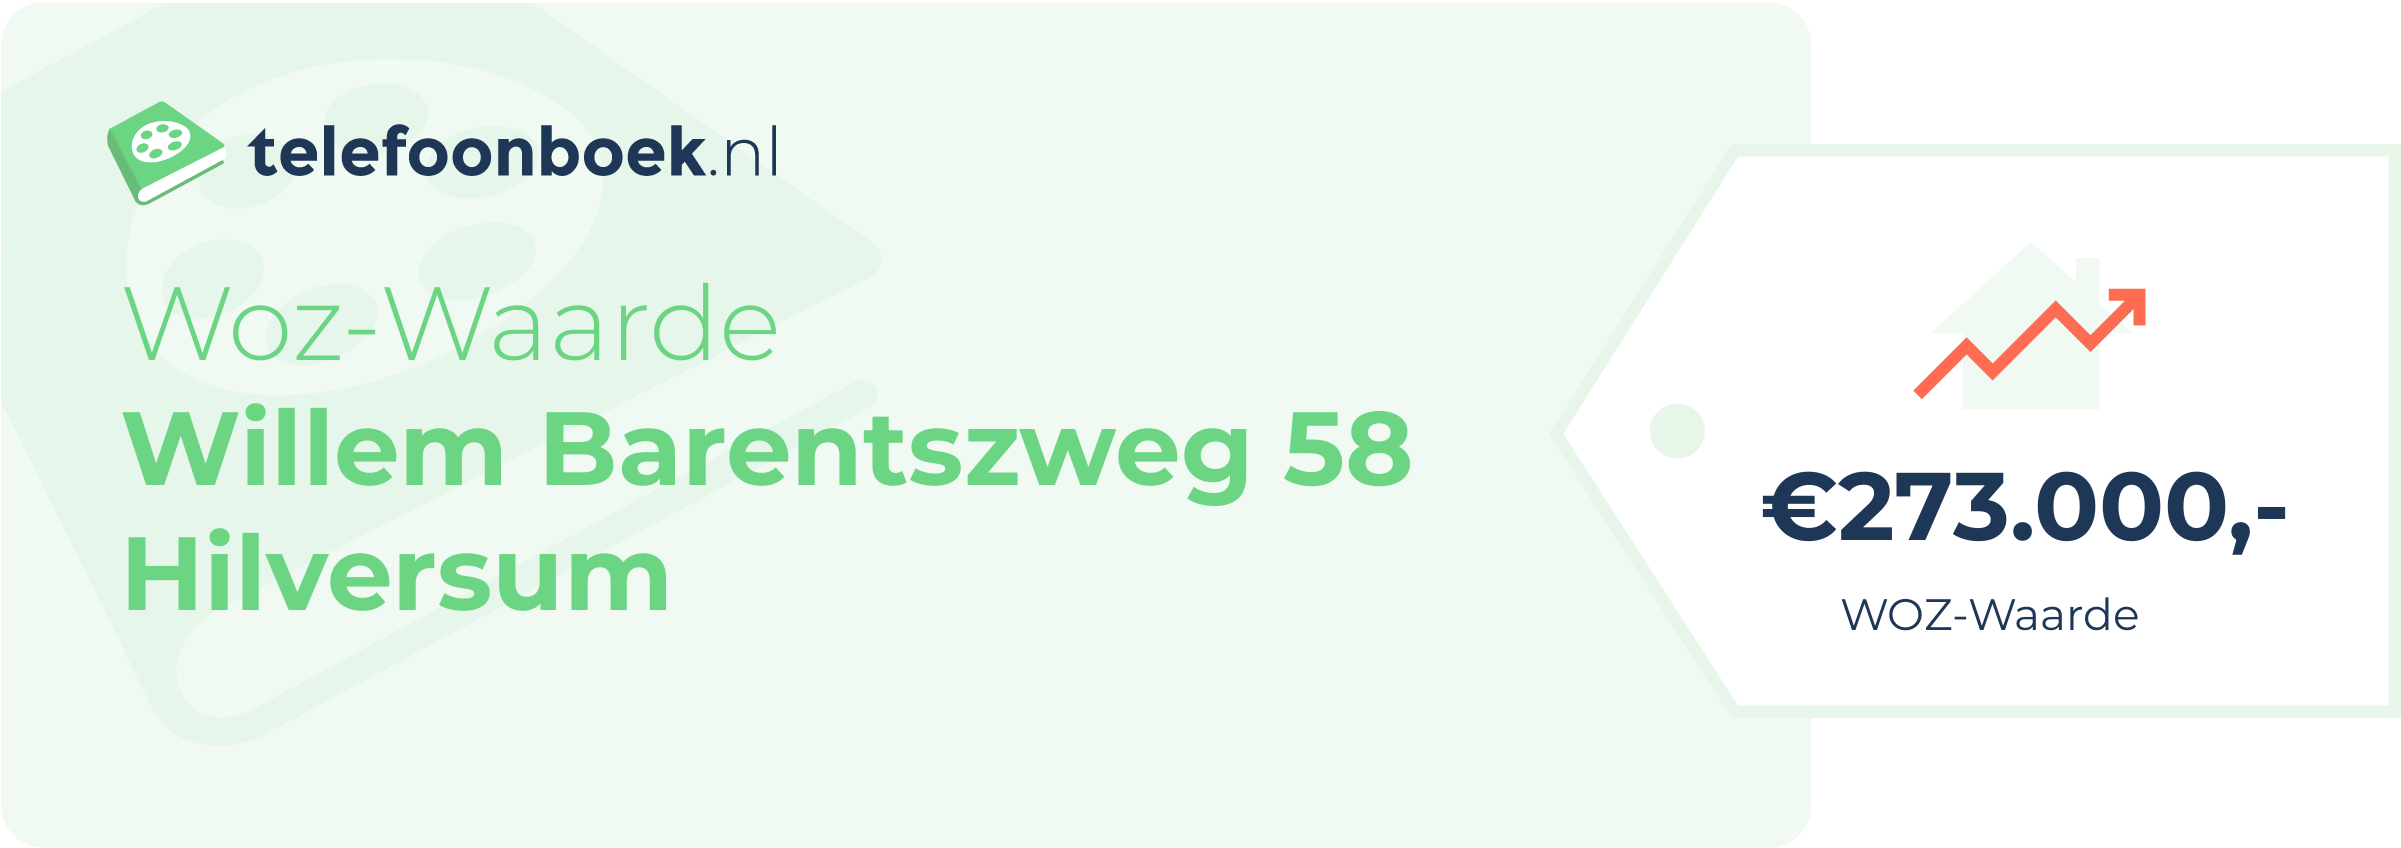 WOZ-waarde Willem Barentszweg 58 Hilversum